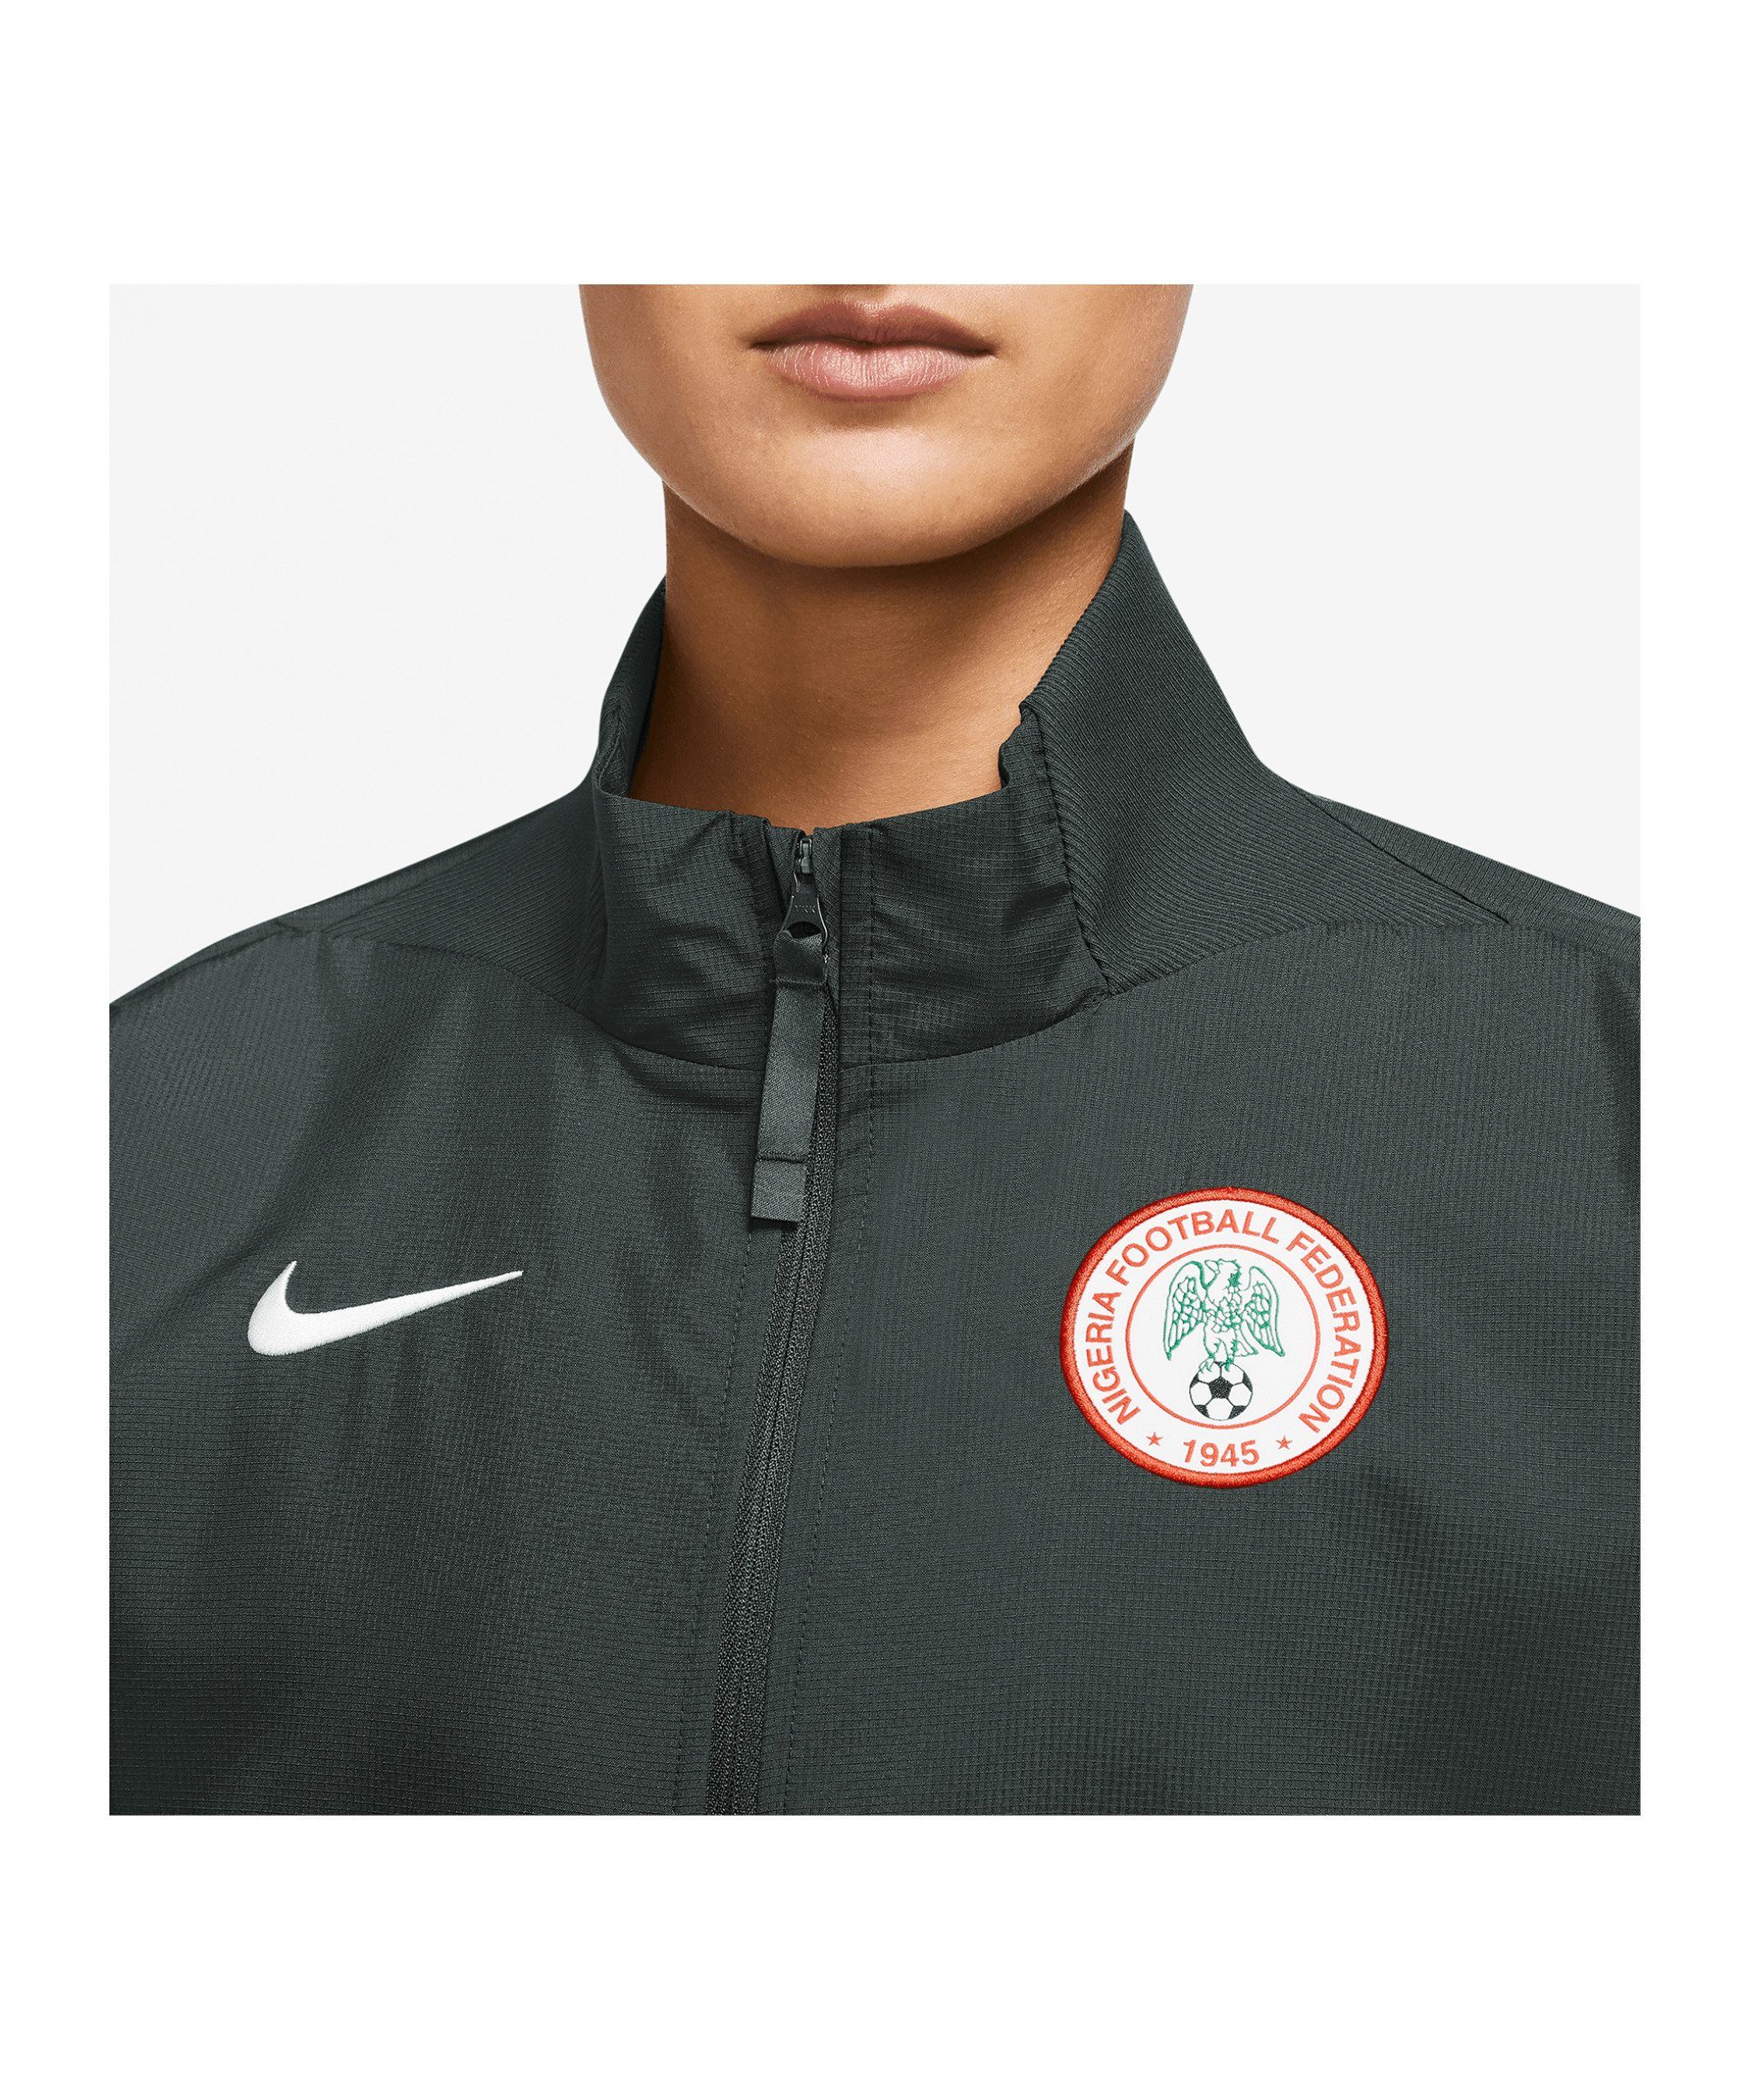 Nike Damen Anthem Jacke Nigeria Sommerjacke